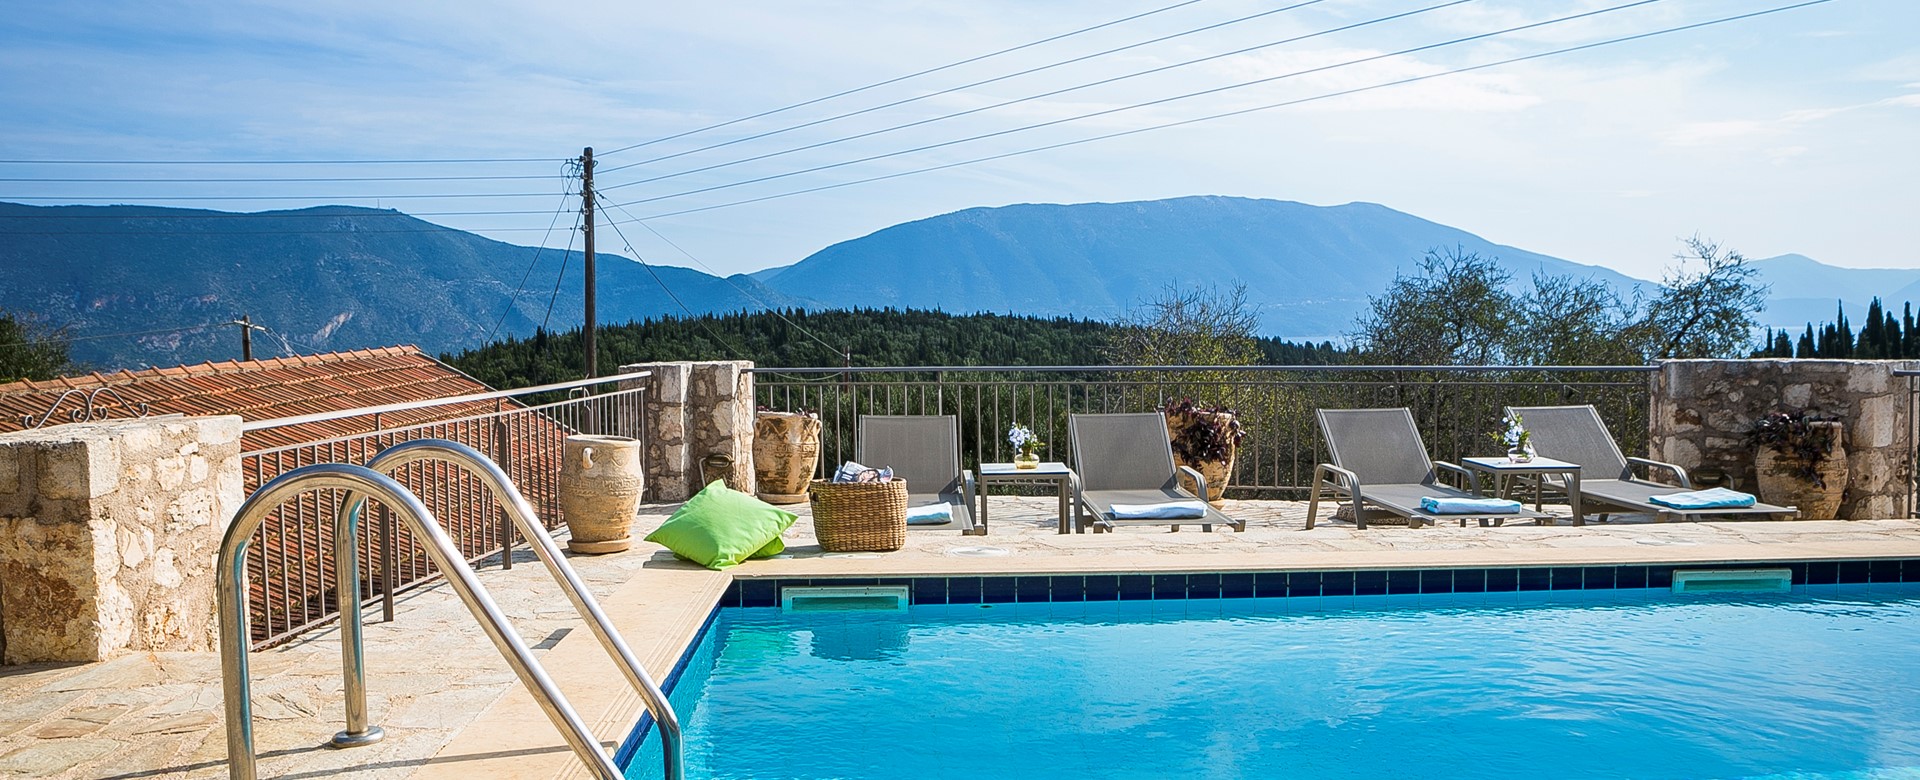 A pool and sunbathing spot with a view, Villa Pelagia, Fiscardo, Kefalonia, Greek Islands